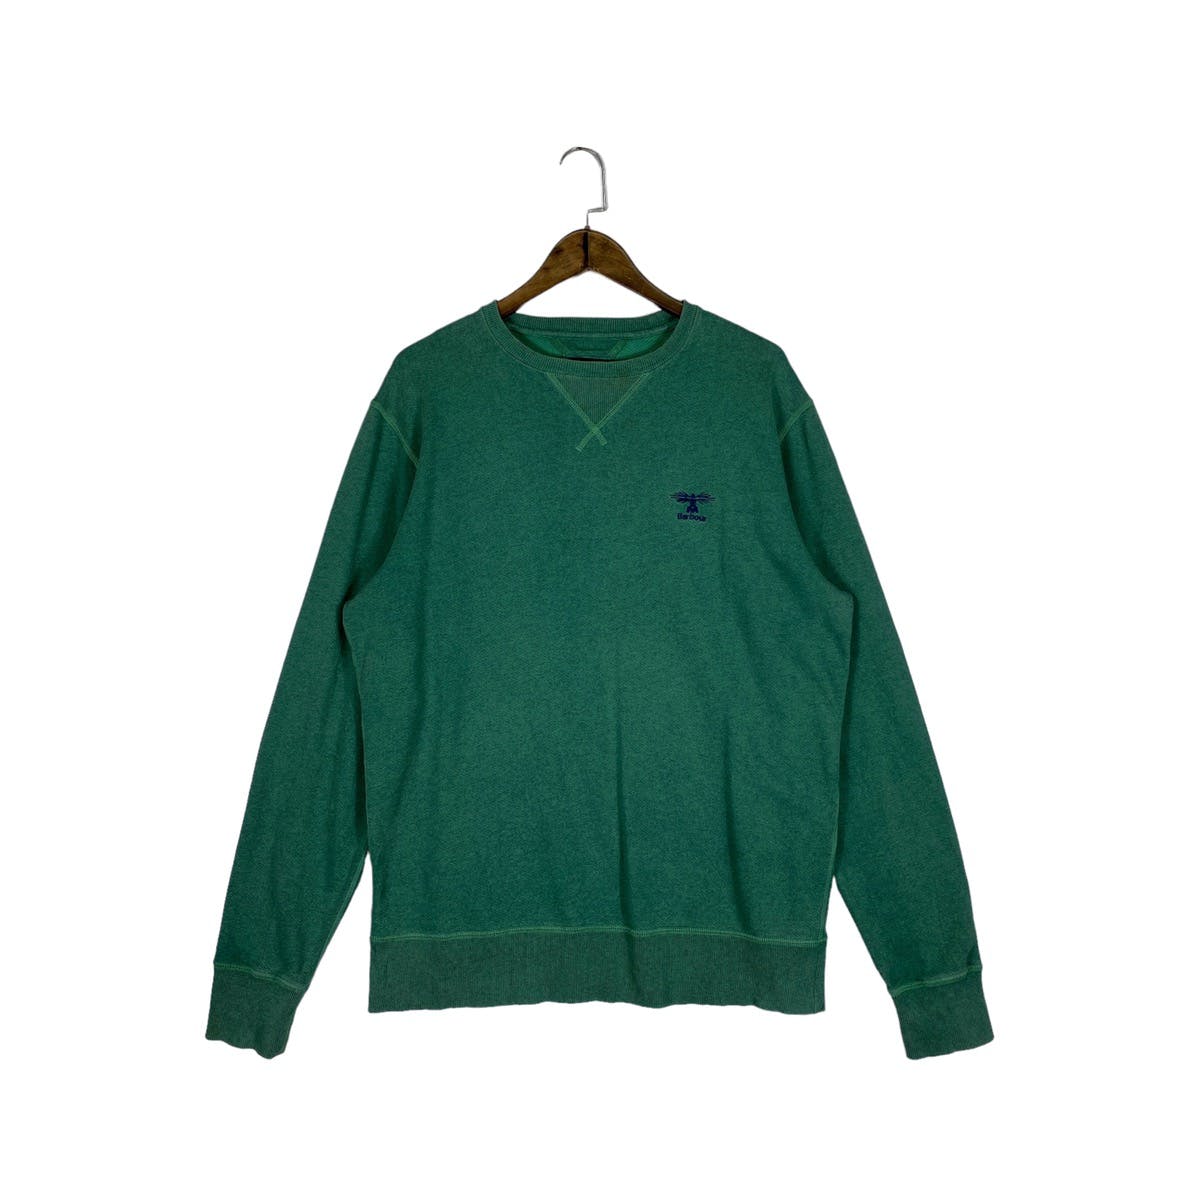 Vintage Barbour Sweatshirt Crewneck Made In Portugal - 1